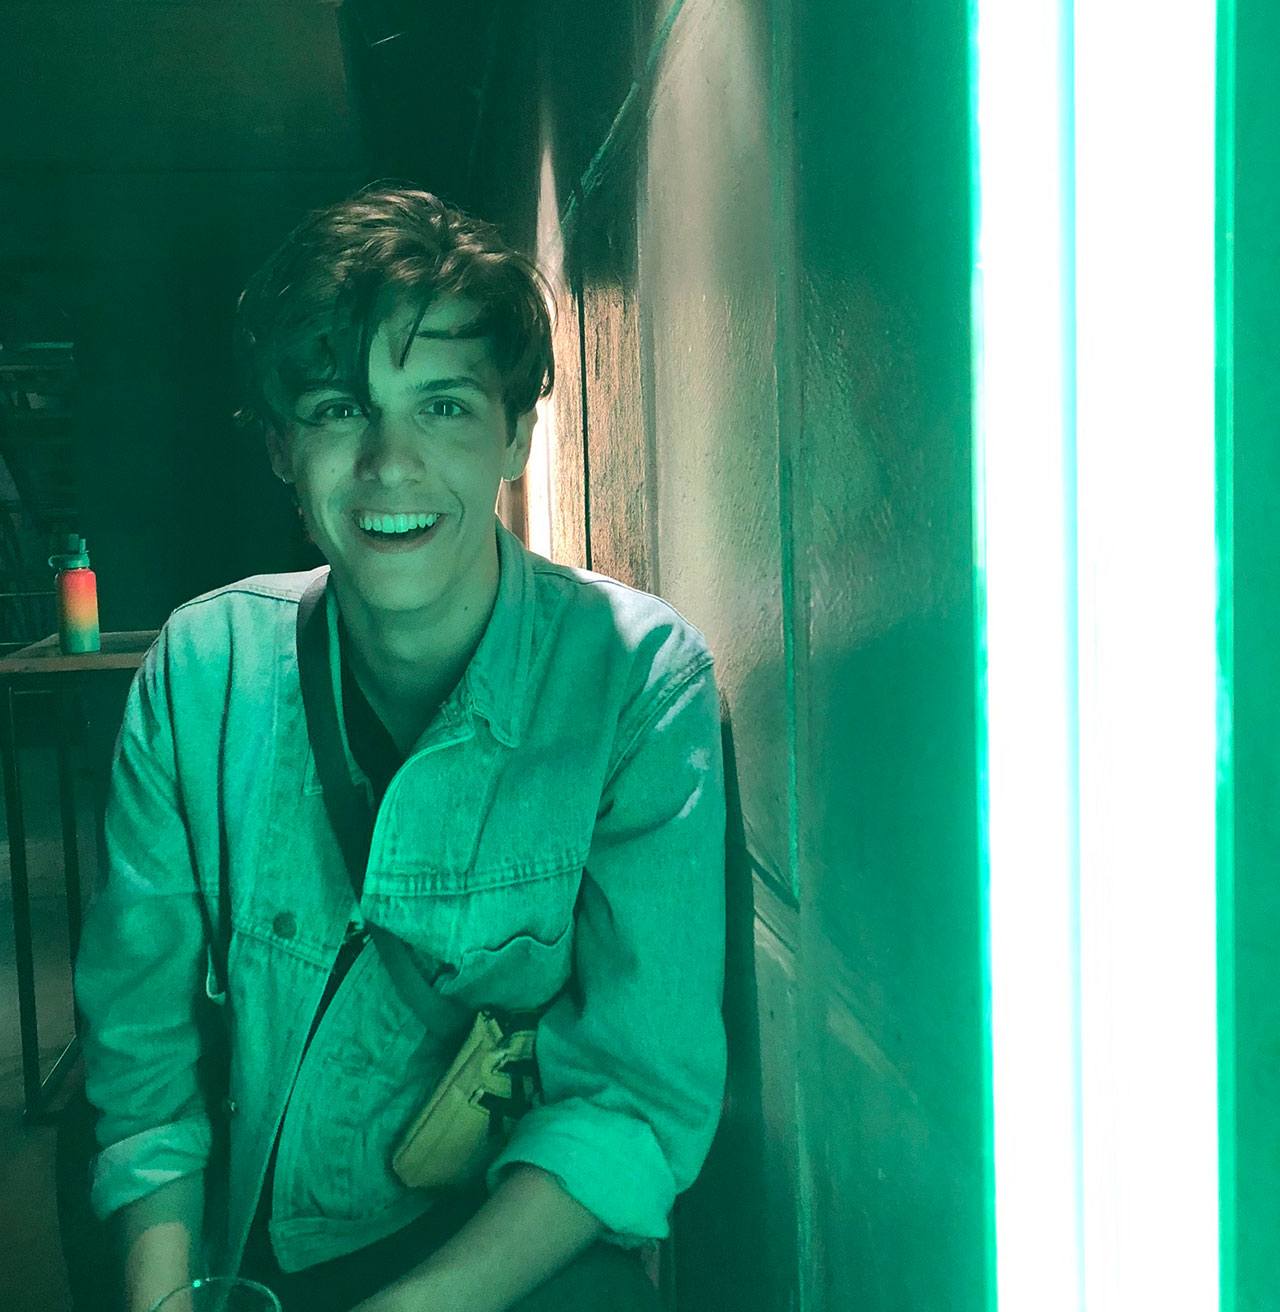 Justin Kipp posing in front of a vibrant green neon light.